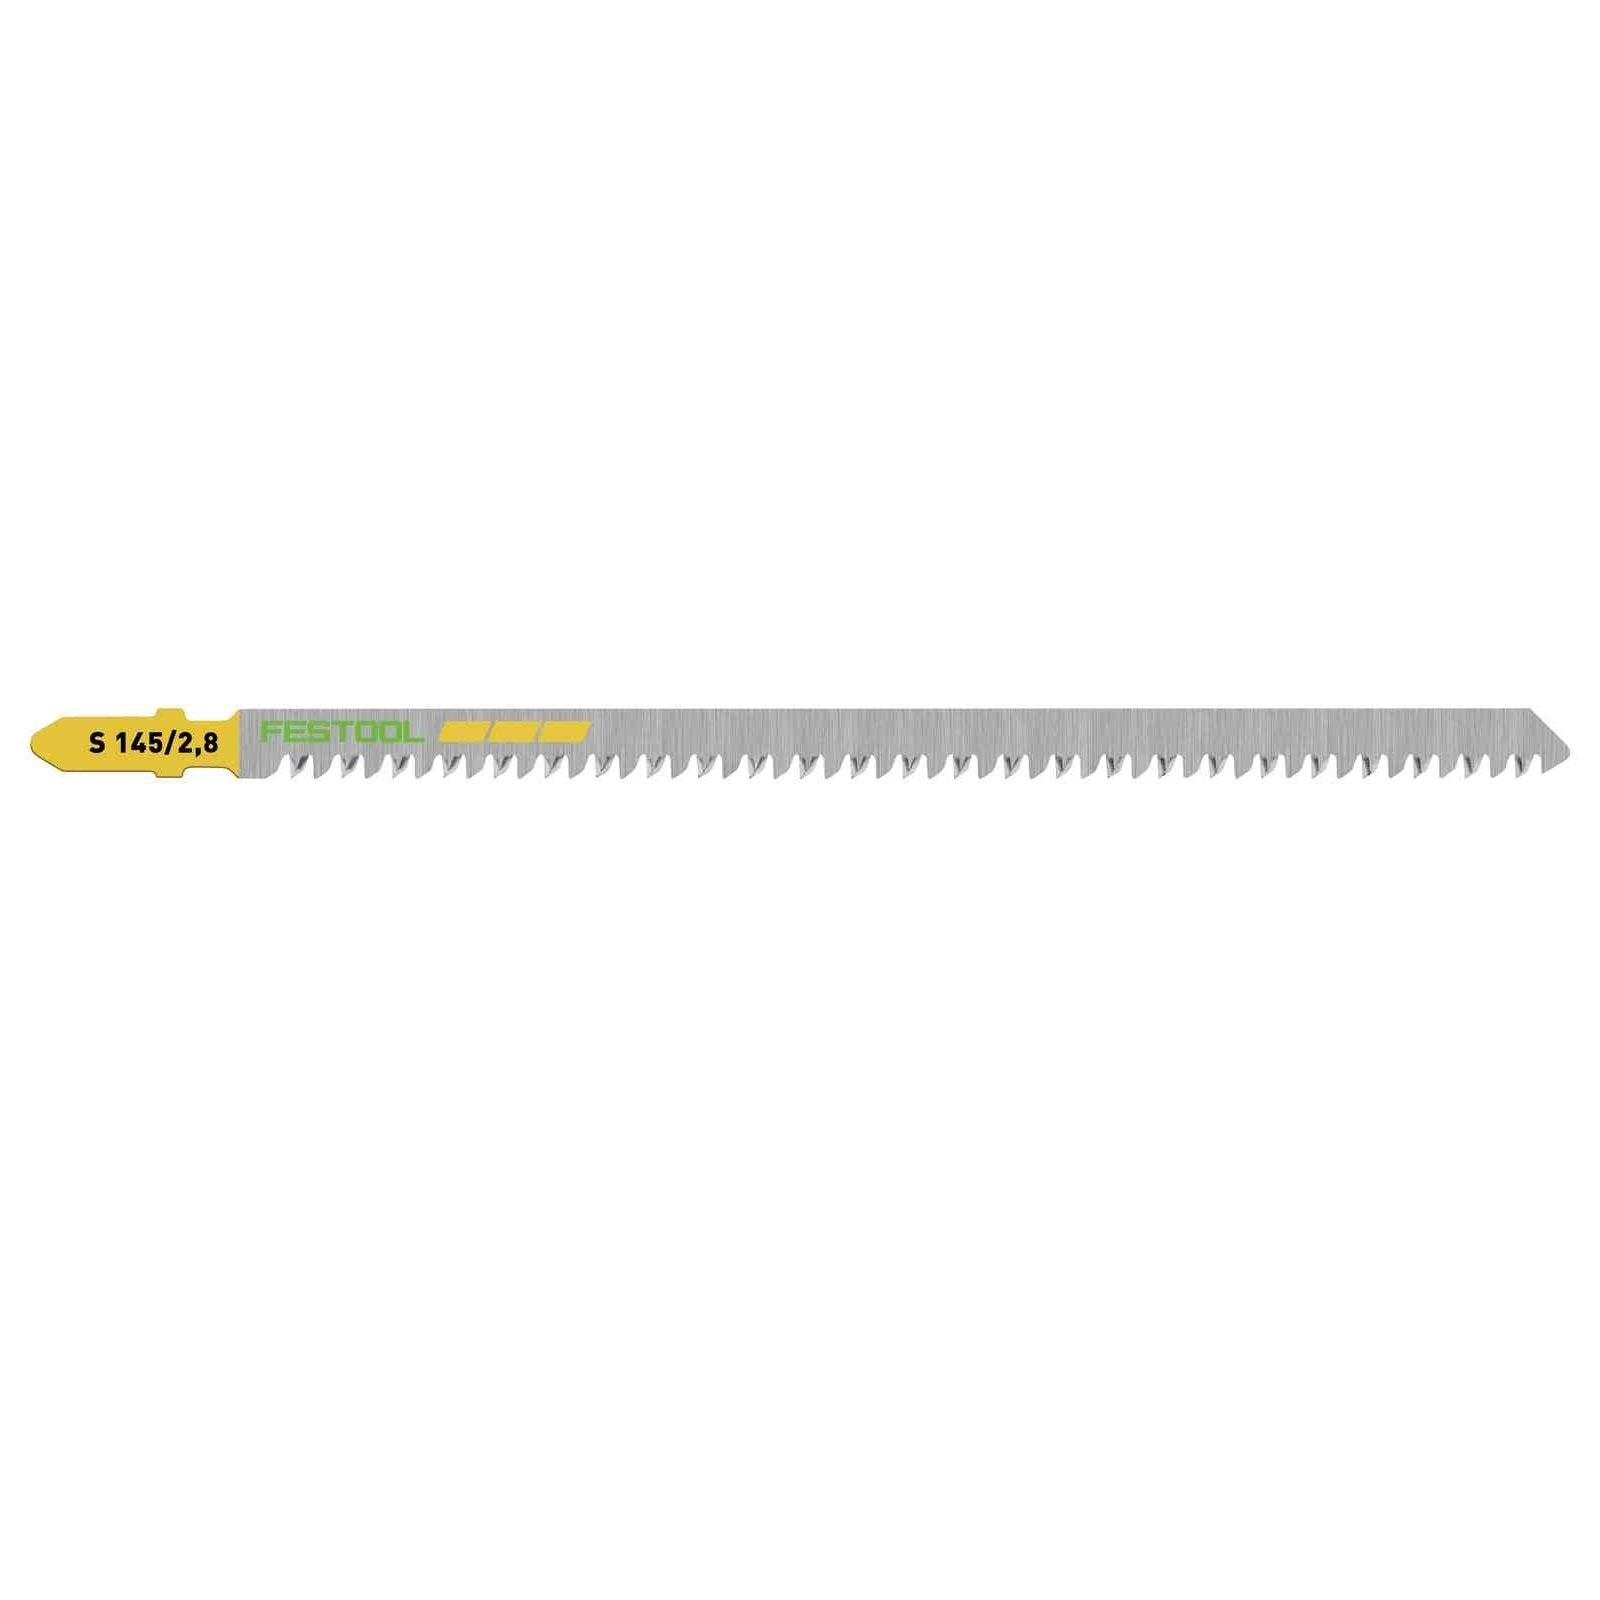 Festool 145mm Jigsaw Blades for Straight Cuts in Wood S 145/2.8 204264